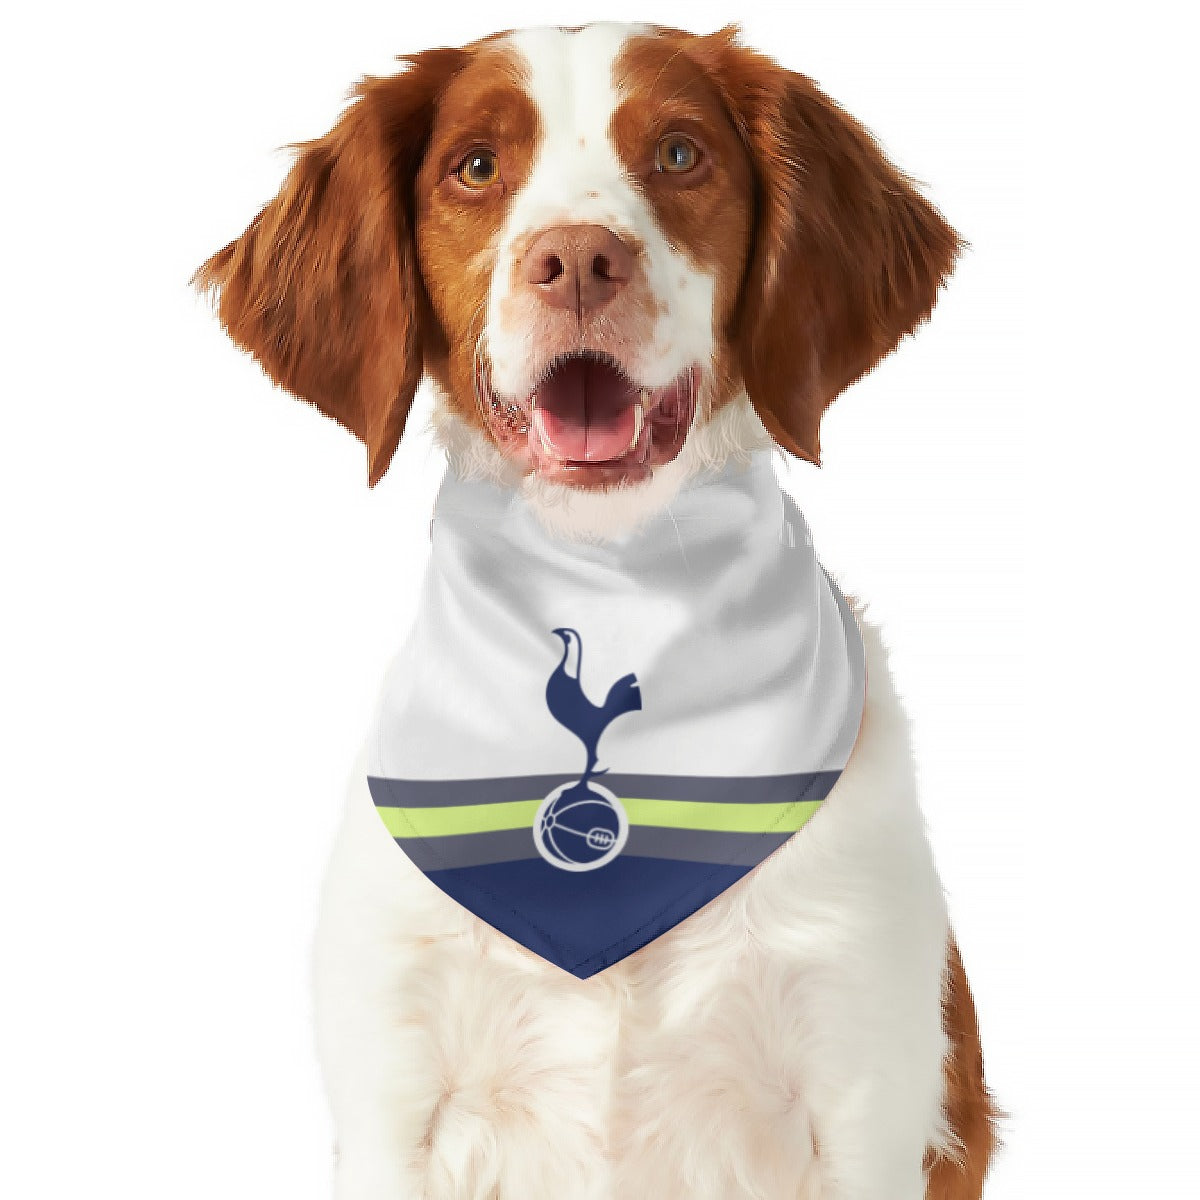 Personalised Spurs Dog Shirt - Tottenham Hotspur Dog Shirt